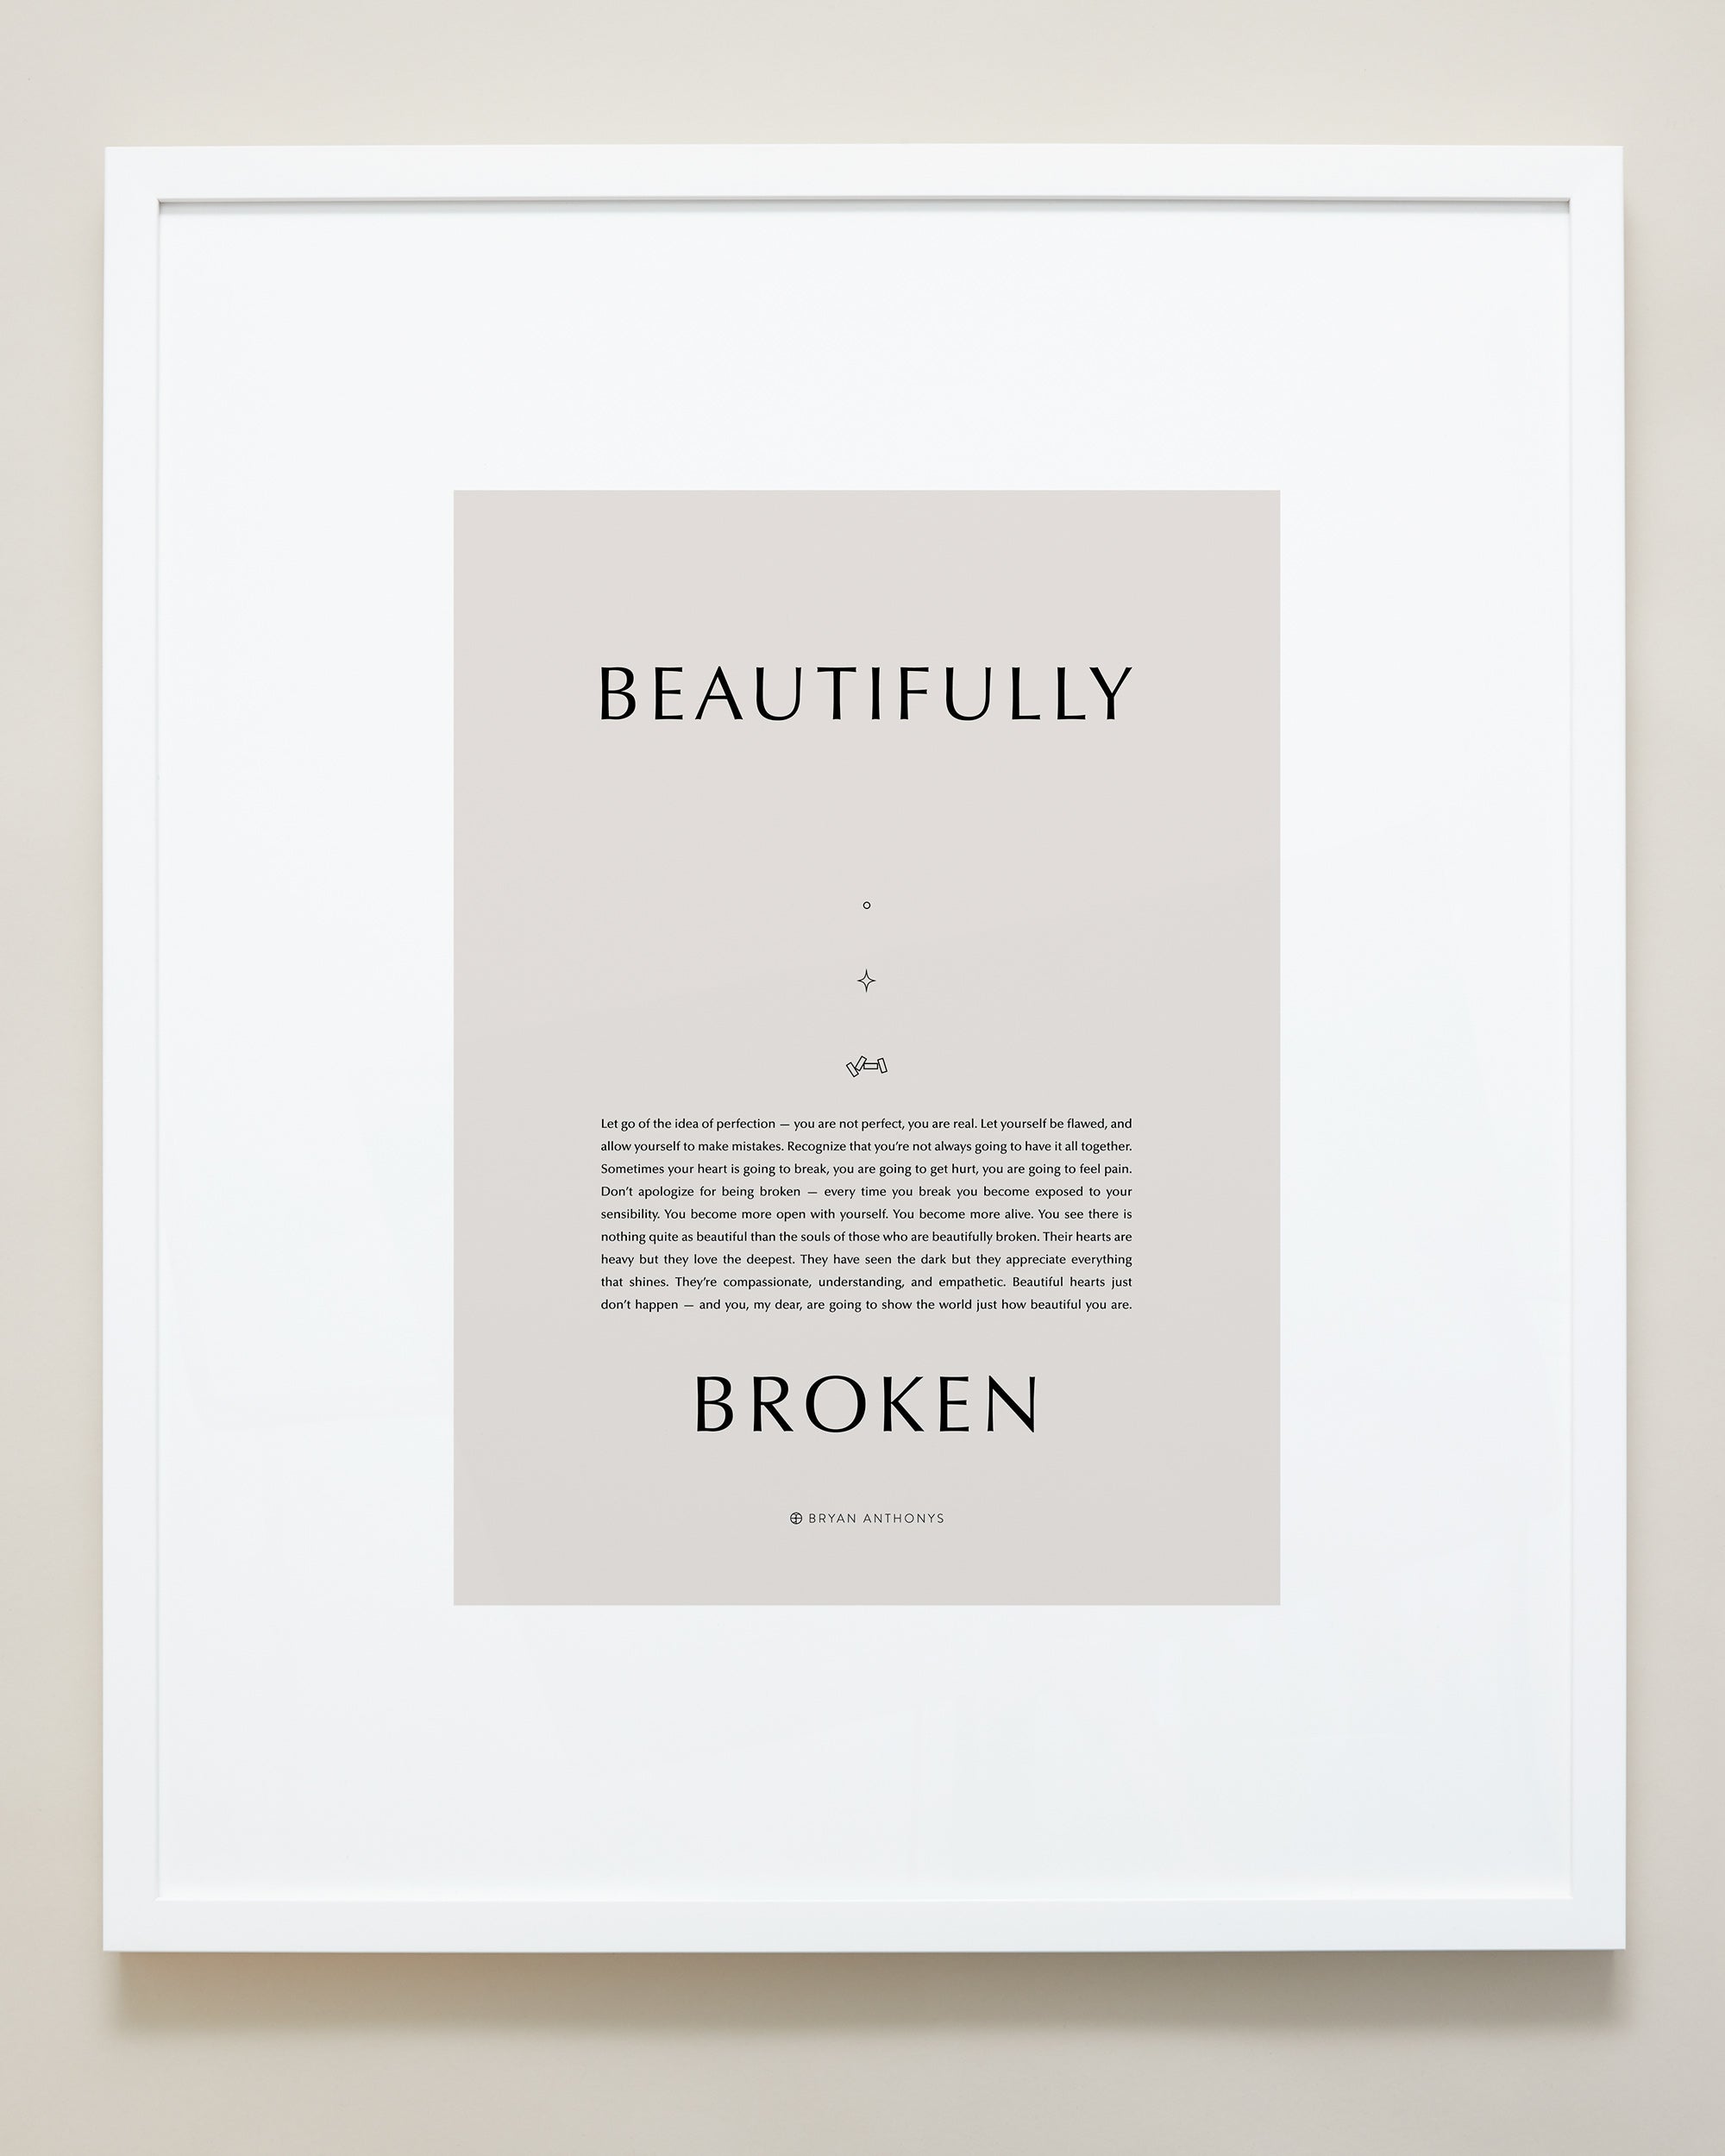 Bryan Anthonys Home Decor Purposeful Prints Beautifully Broken Iconic Framed Print White Frame Tan Art 20x24